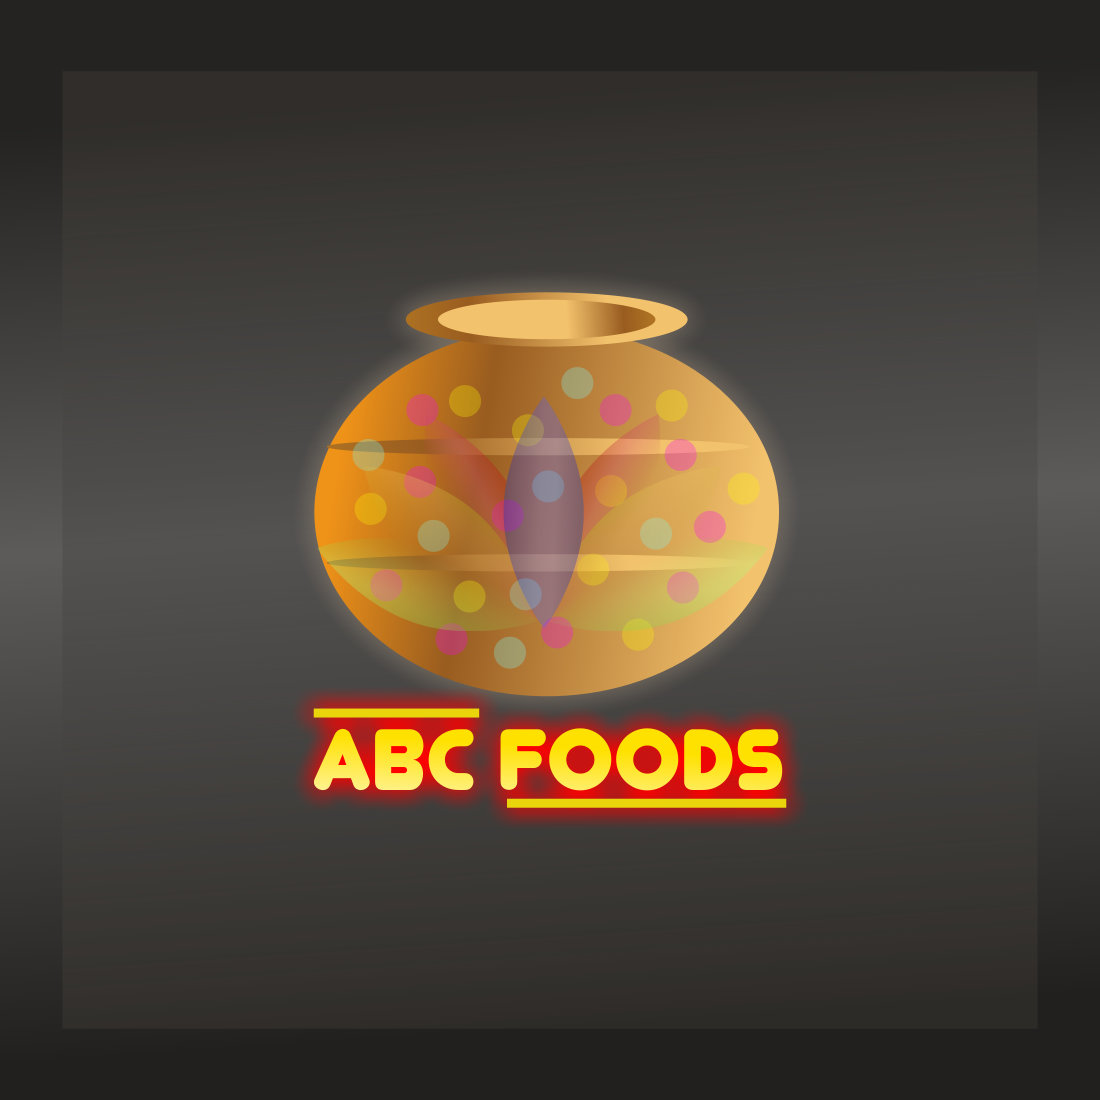 ABC Food Logo Design cover image.